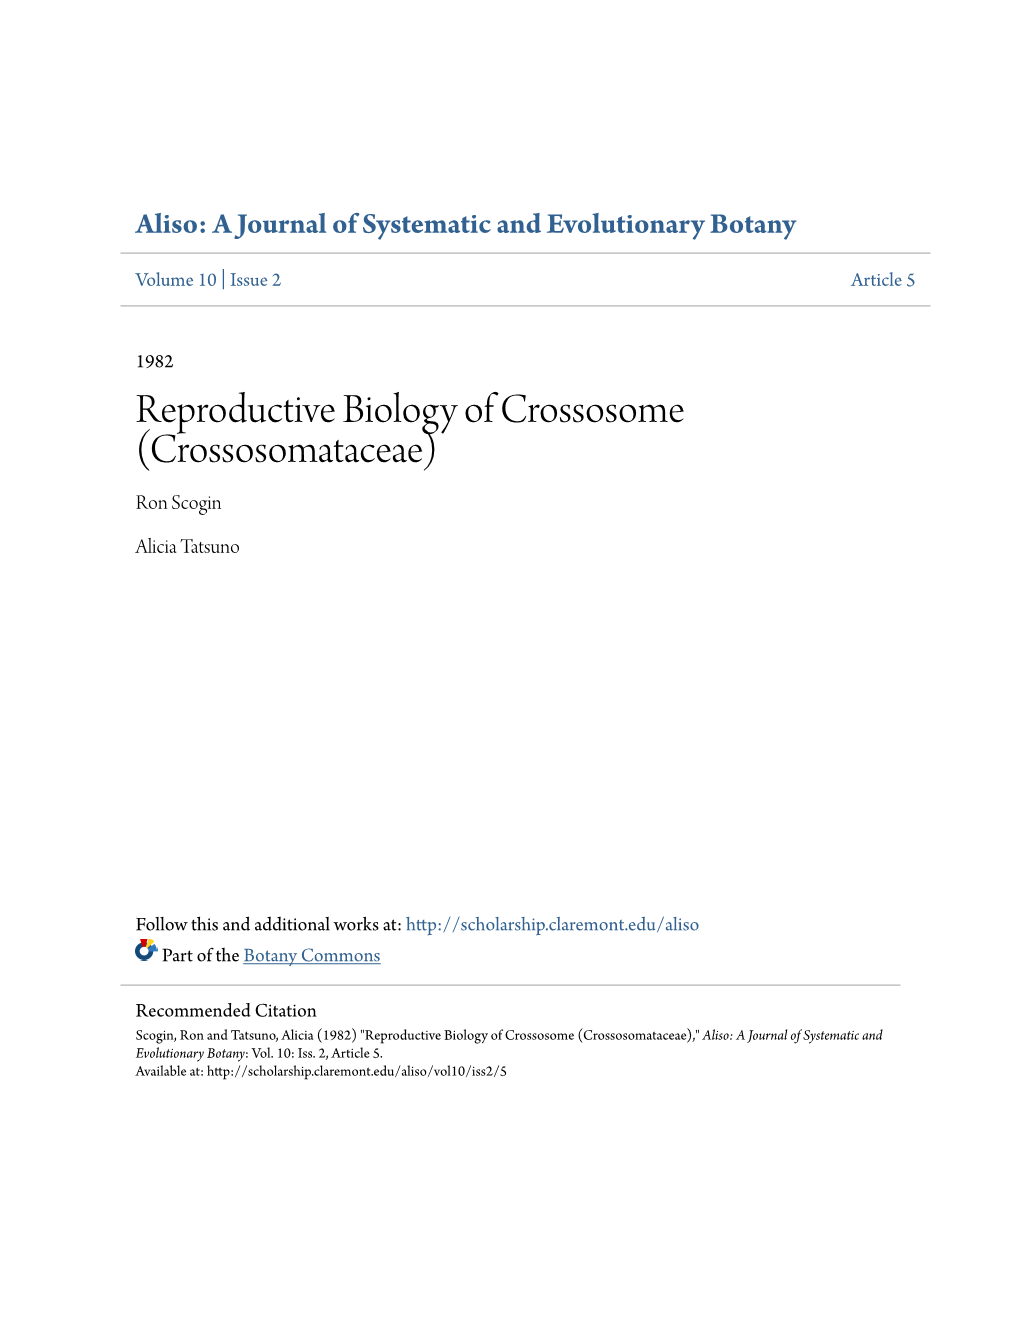 Reproductive Biology of Crossosome (Crossosomataceae) Ron Scogin